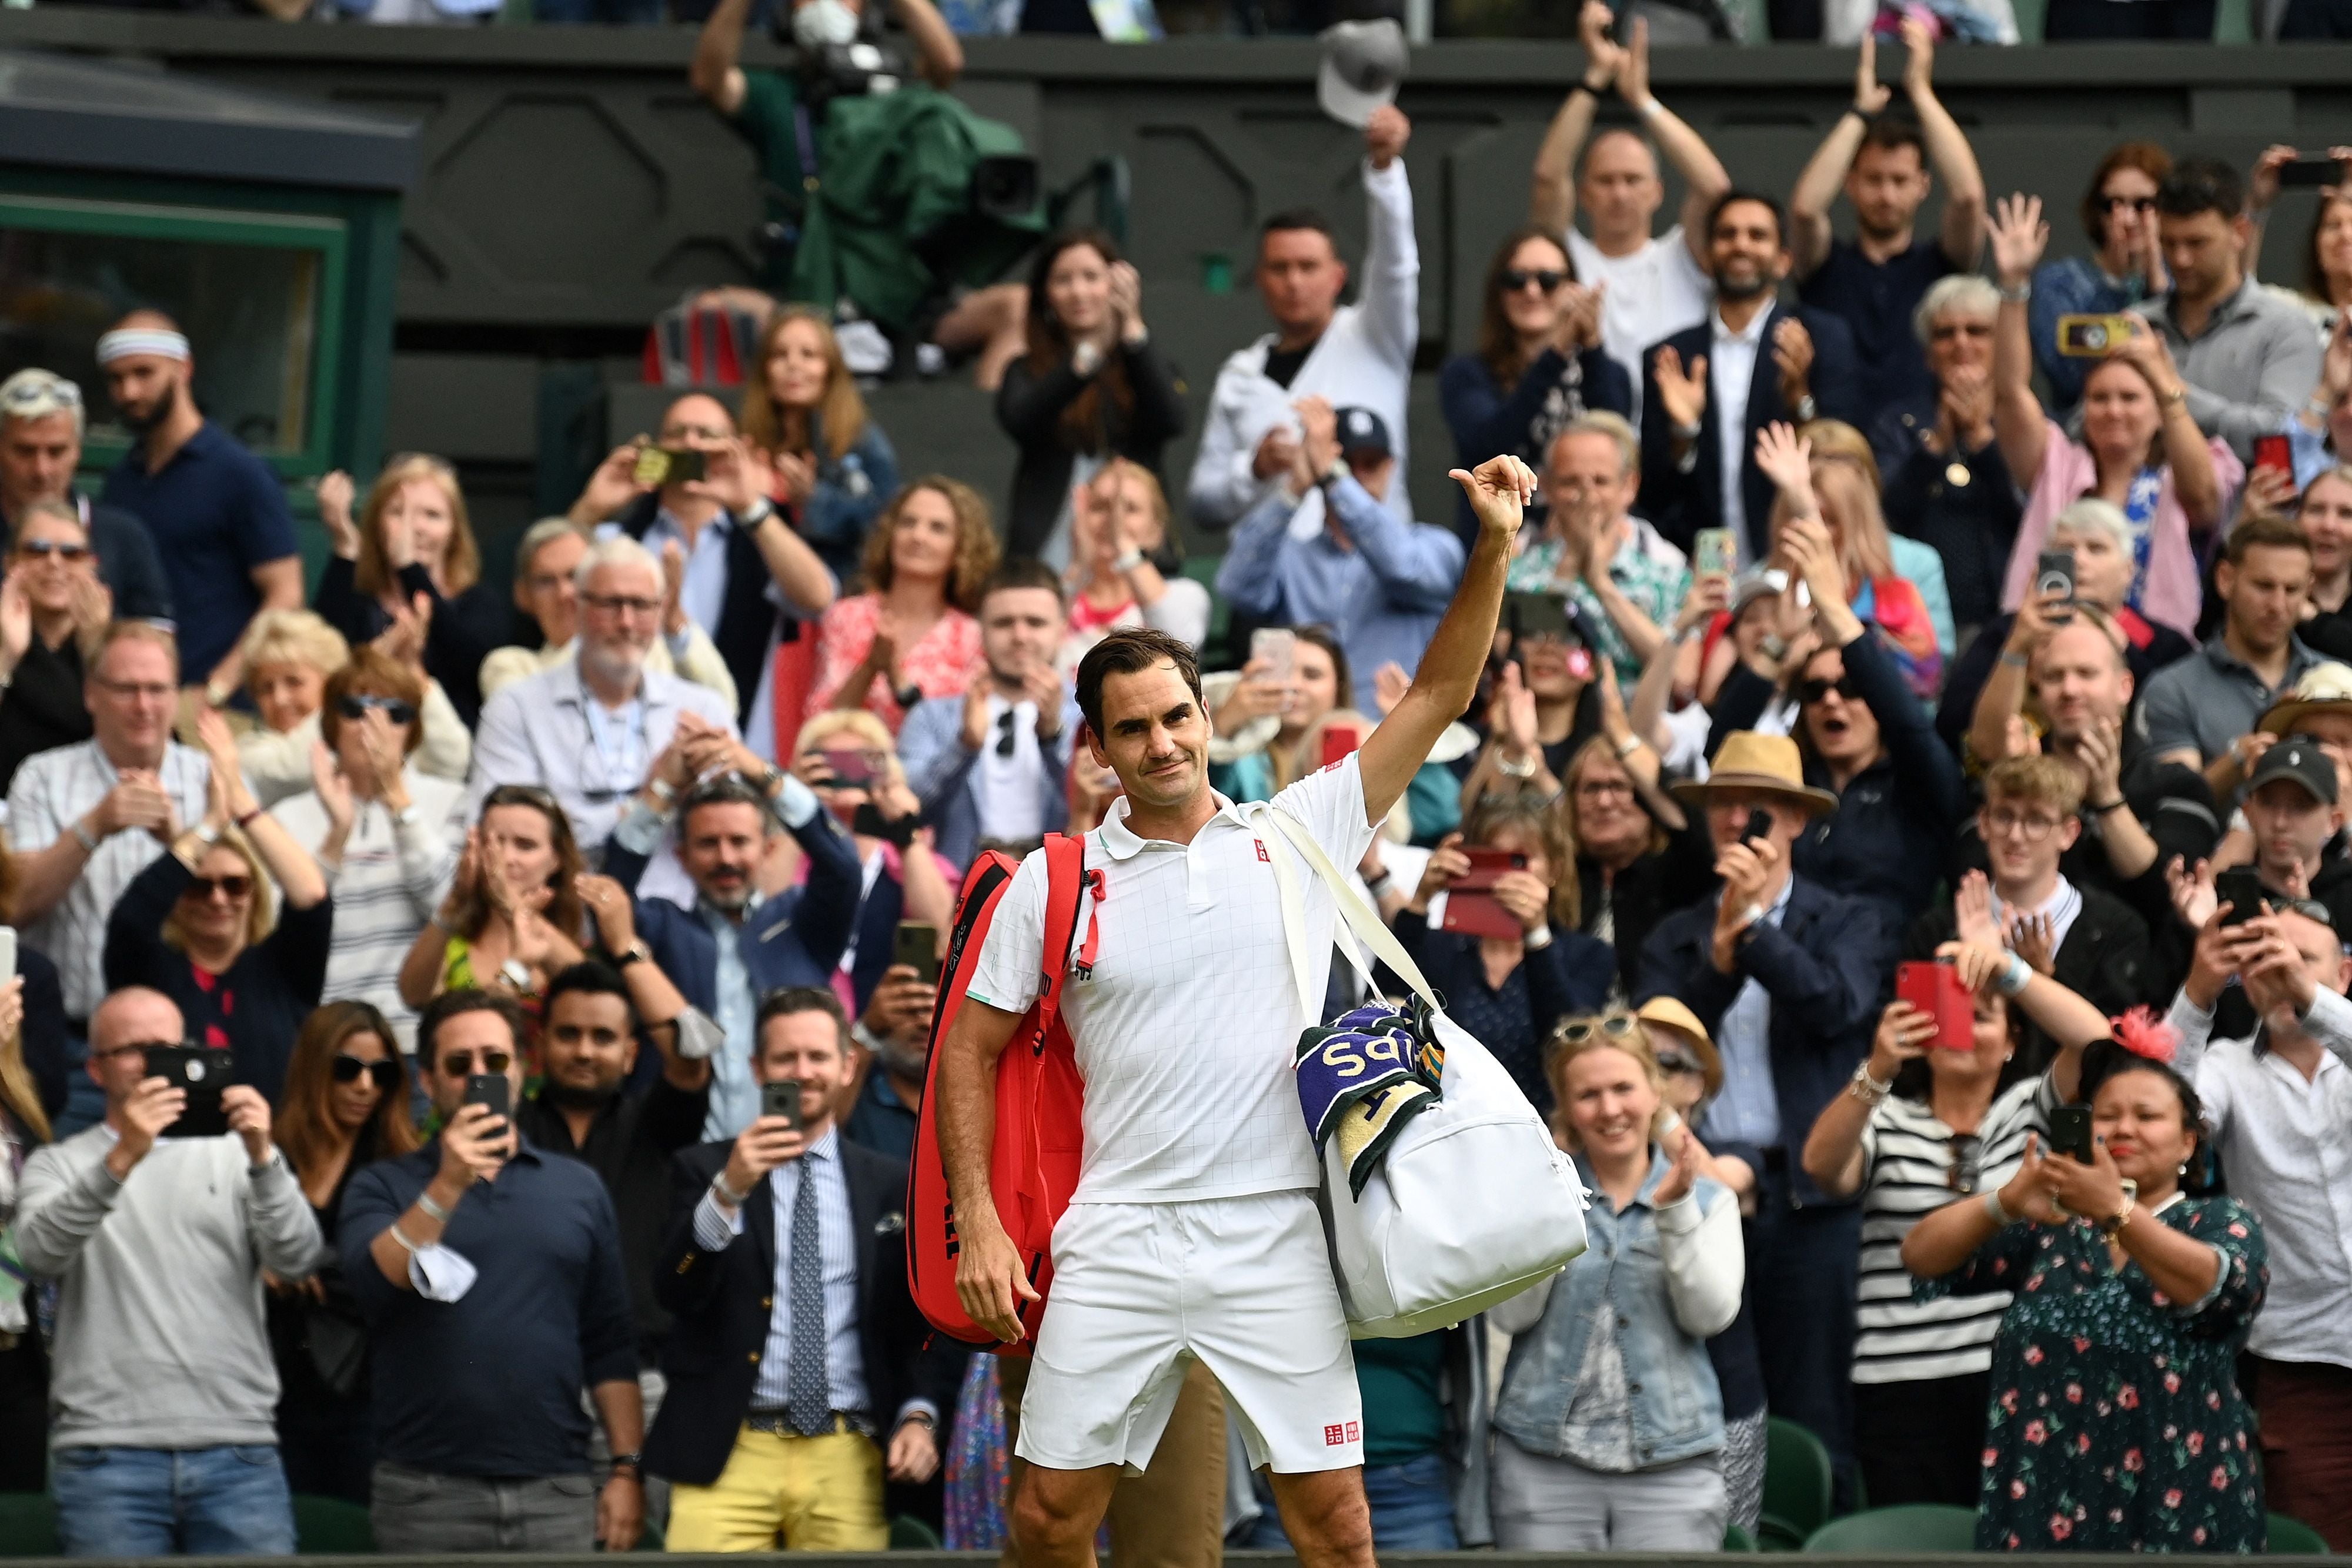 Roger Federer salutes an adoring Centre Court crowd